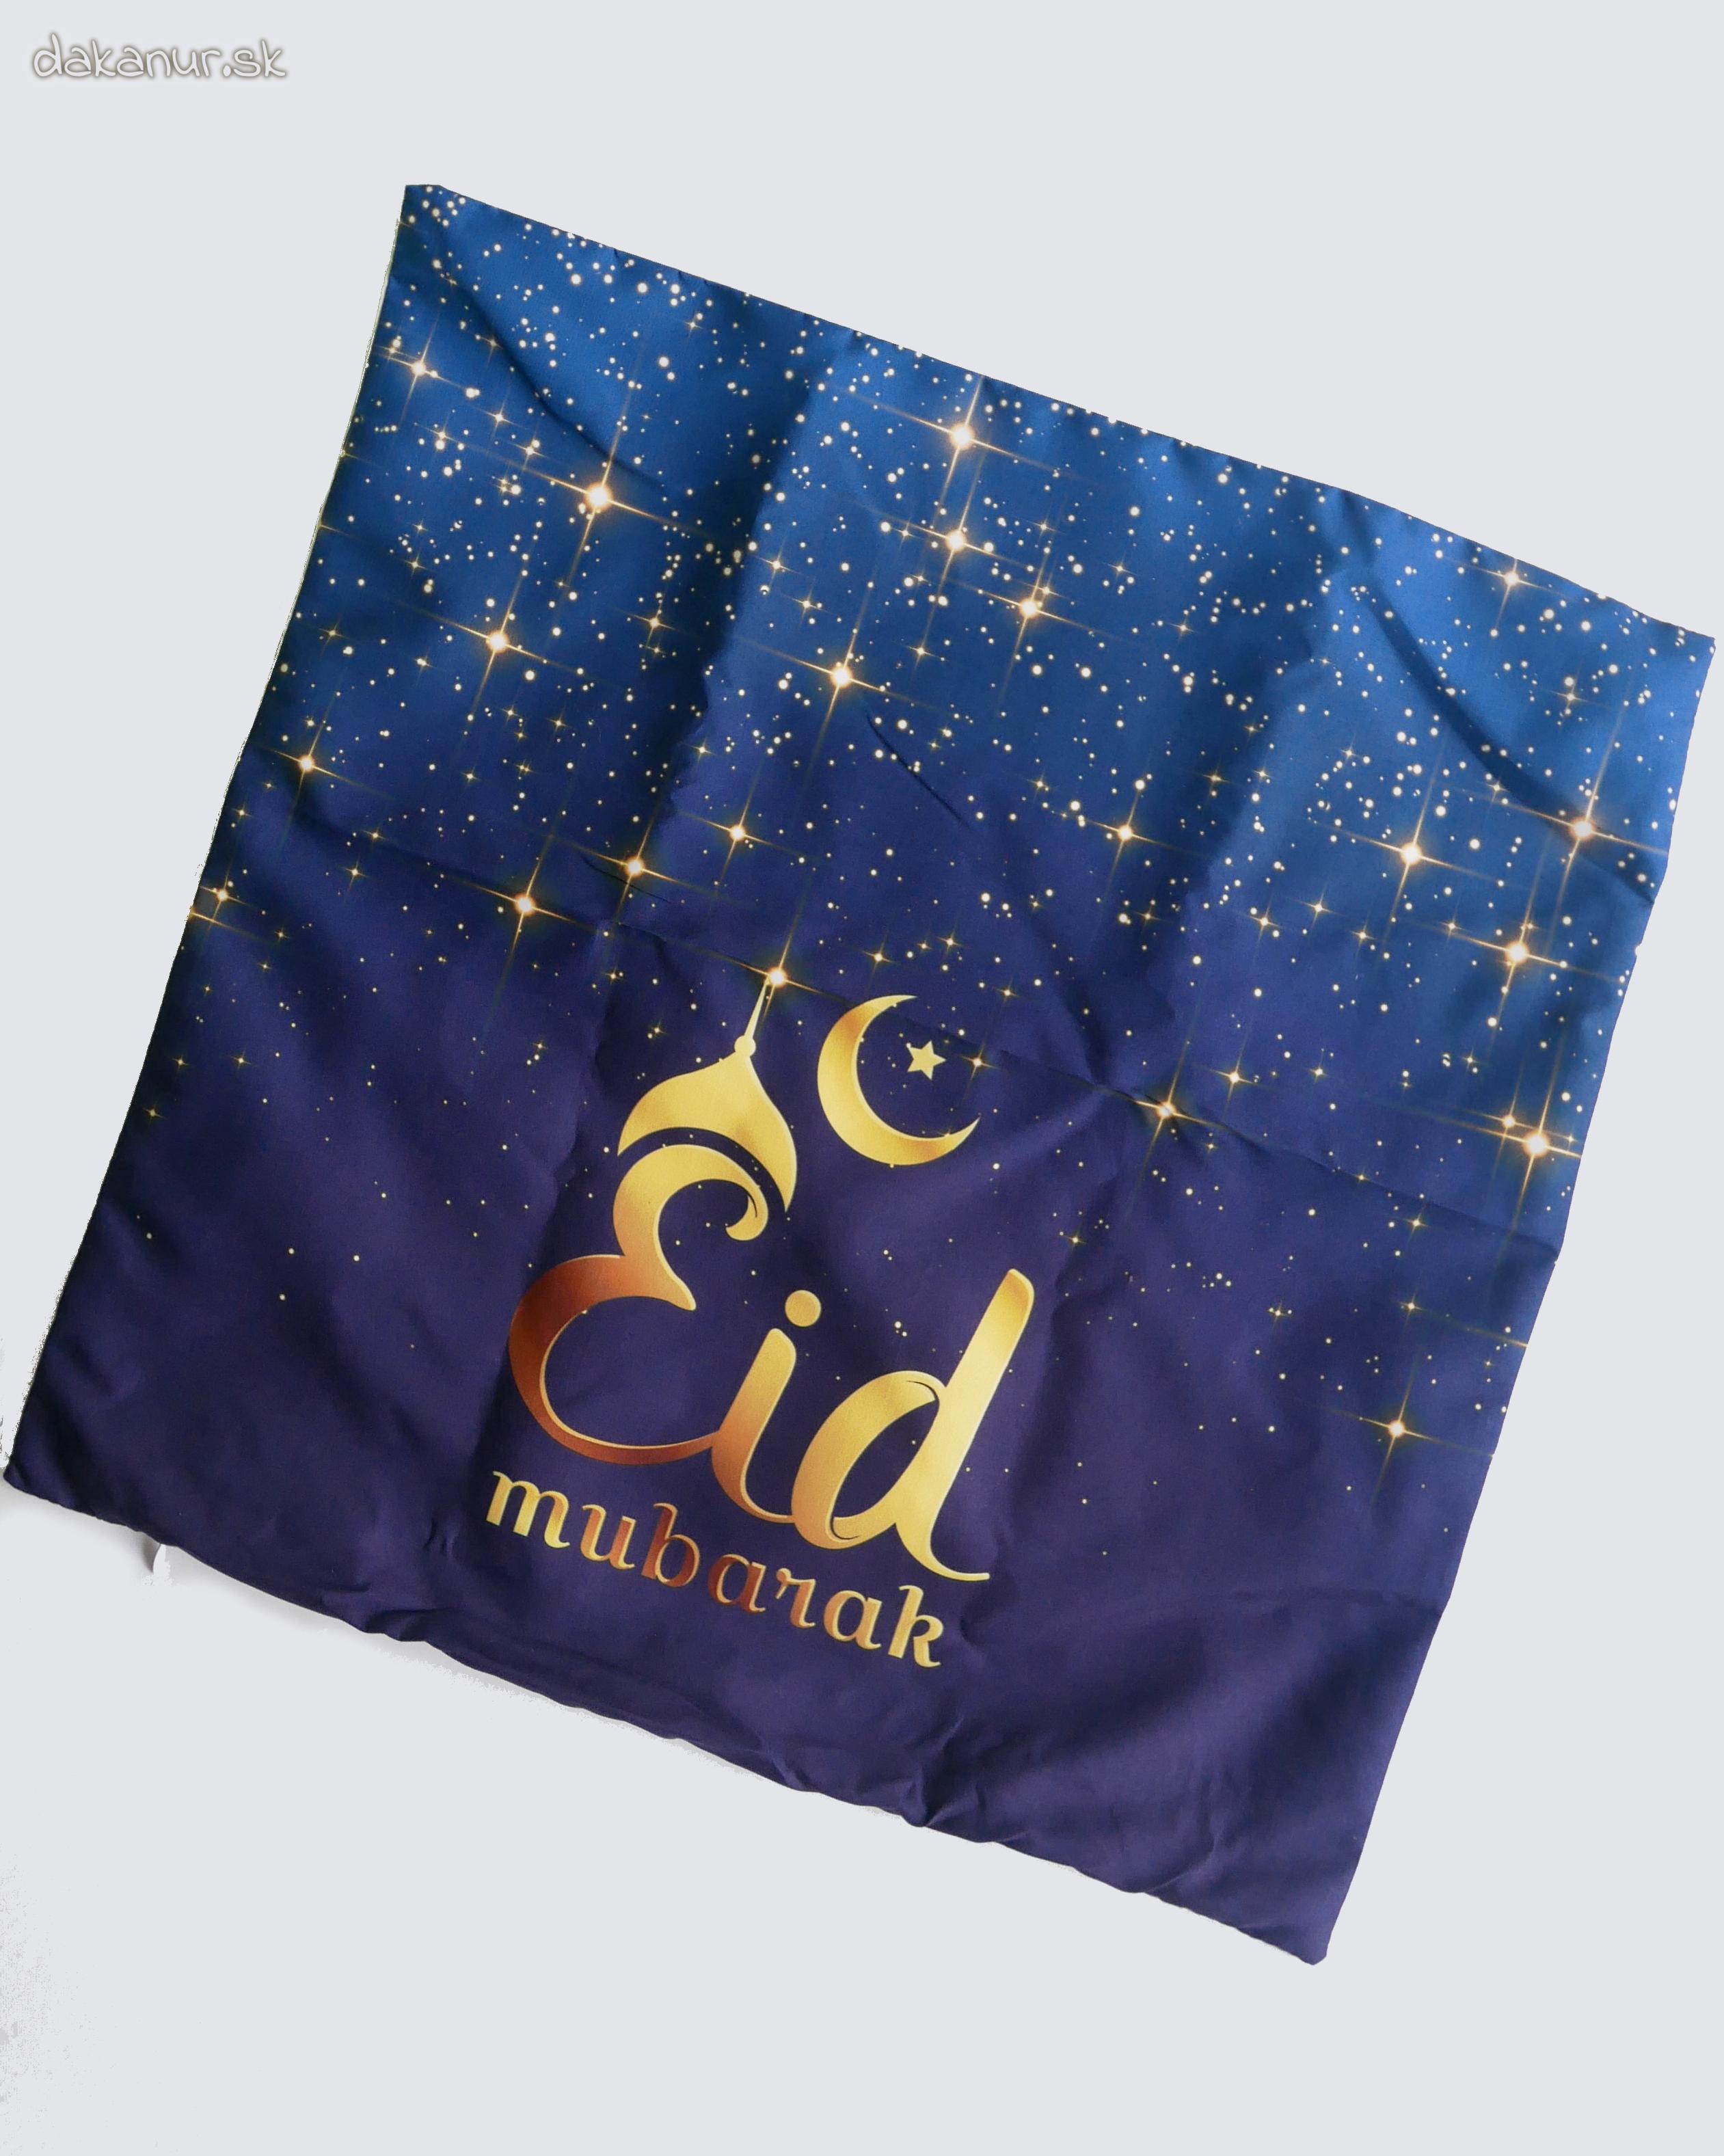 Obliečka na vankúš s potlačou Eid Mubarak, hviezdy